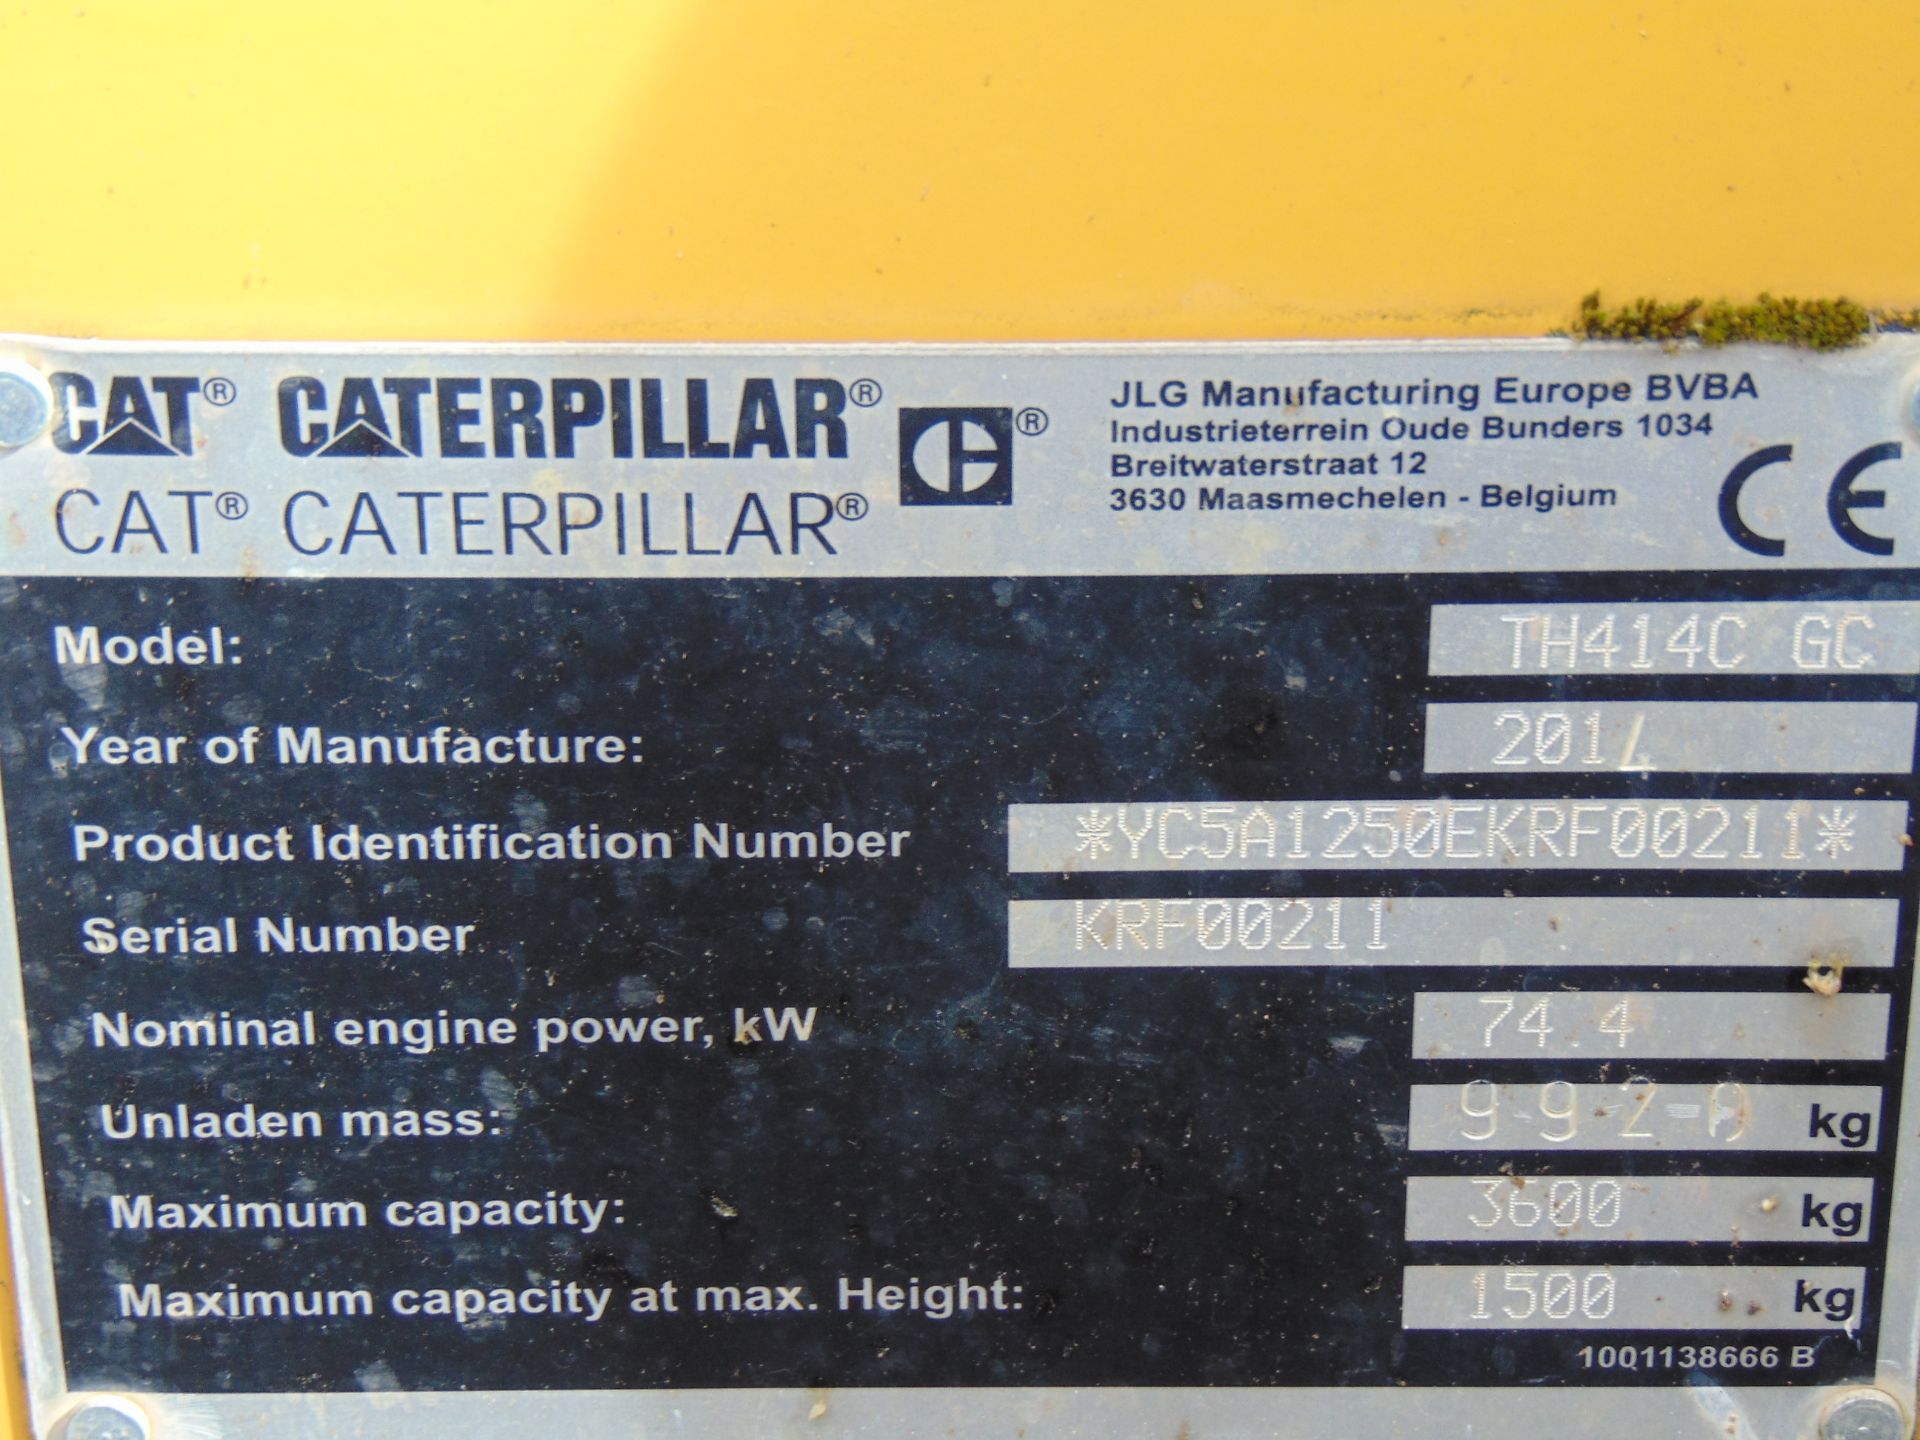 2014 Caterpillar TH414C GC 3.6 ton Telehandler - Image 18 of 18